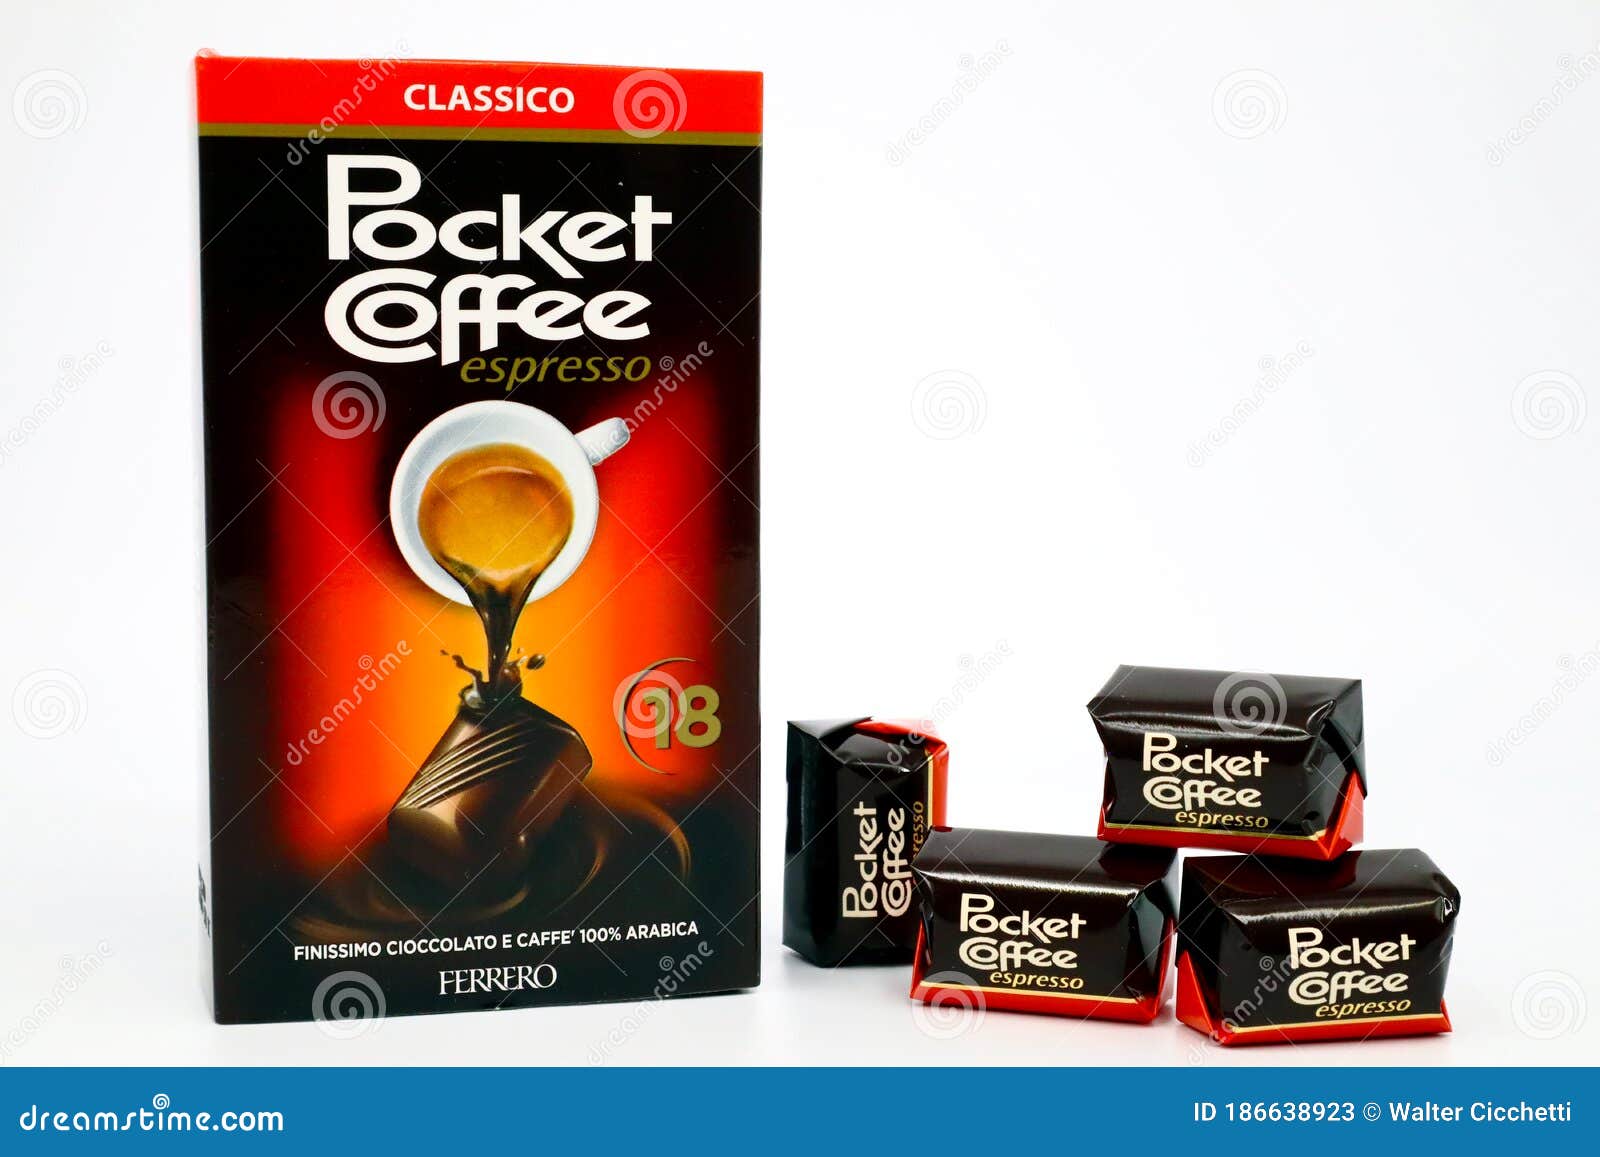 Pocket coffee chocolate